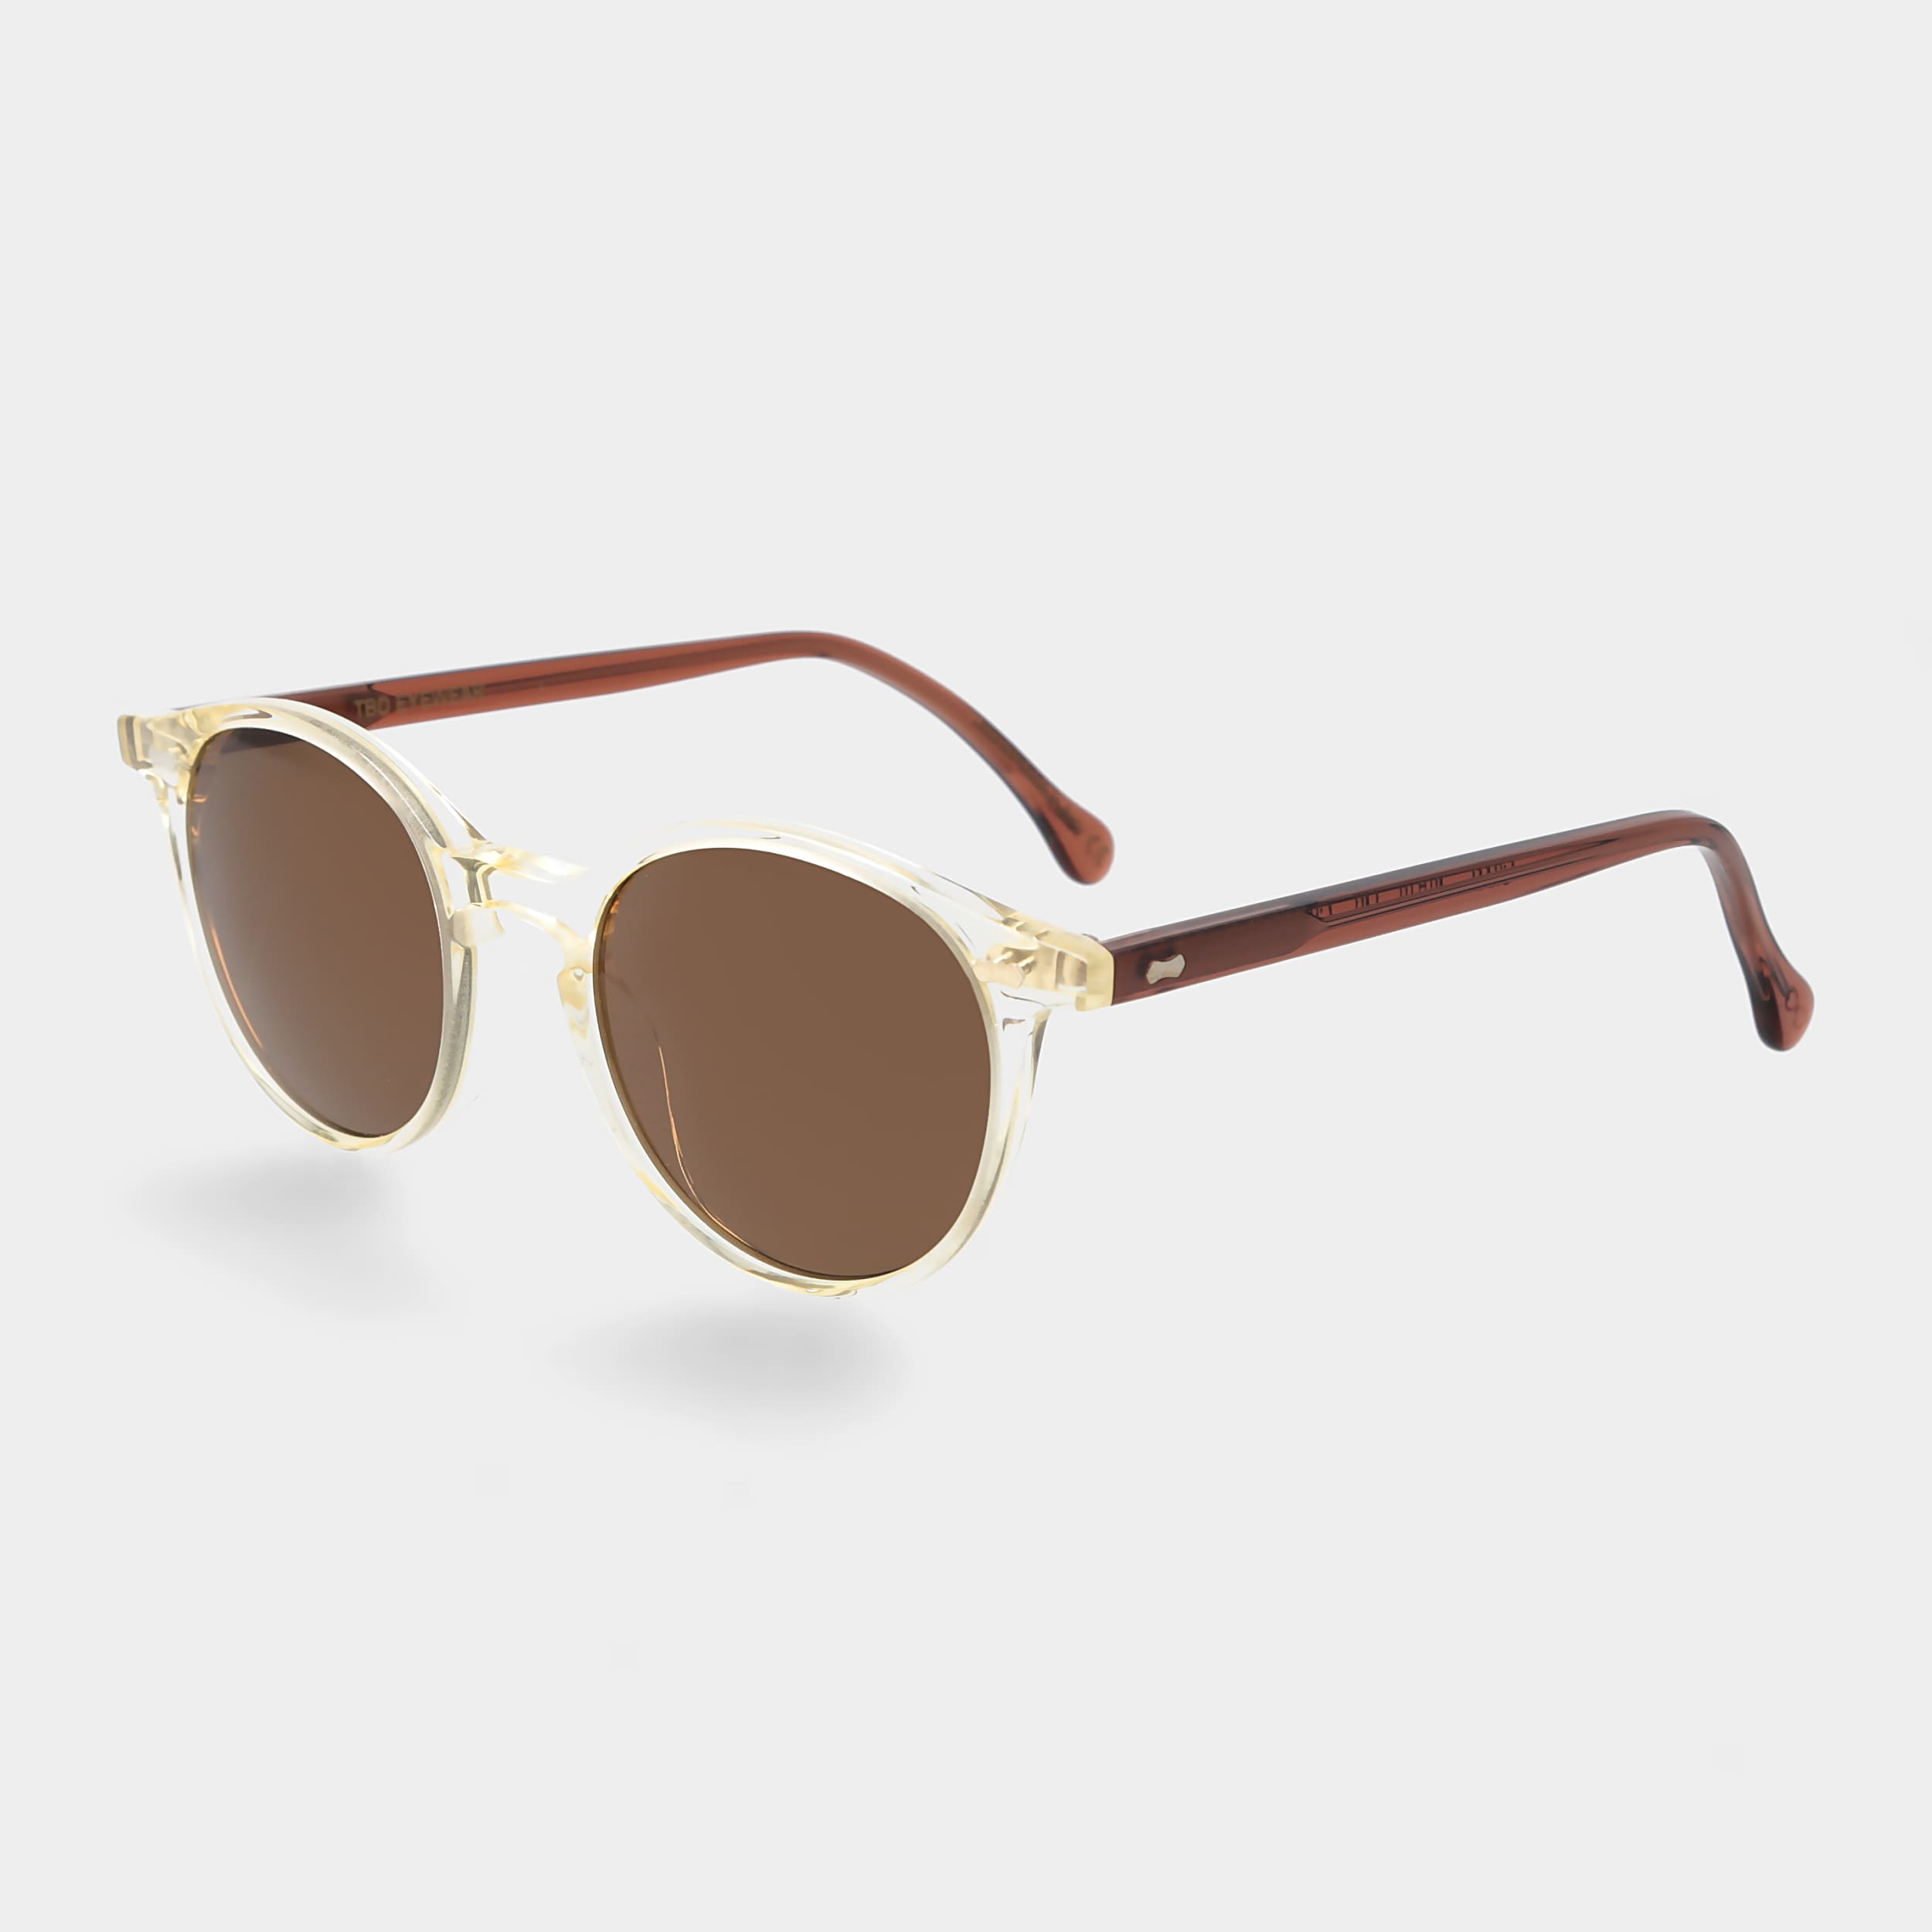 Italy TBD Eyewear | with Brown in Lenses, handmade Sunglasses